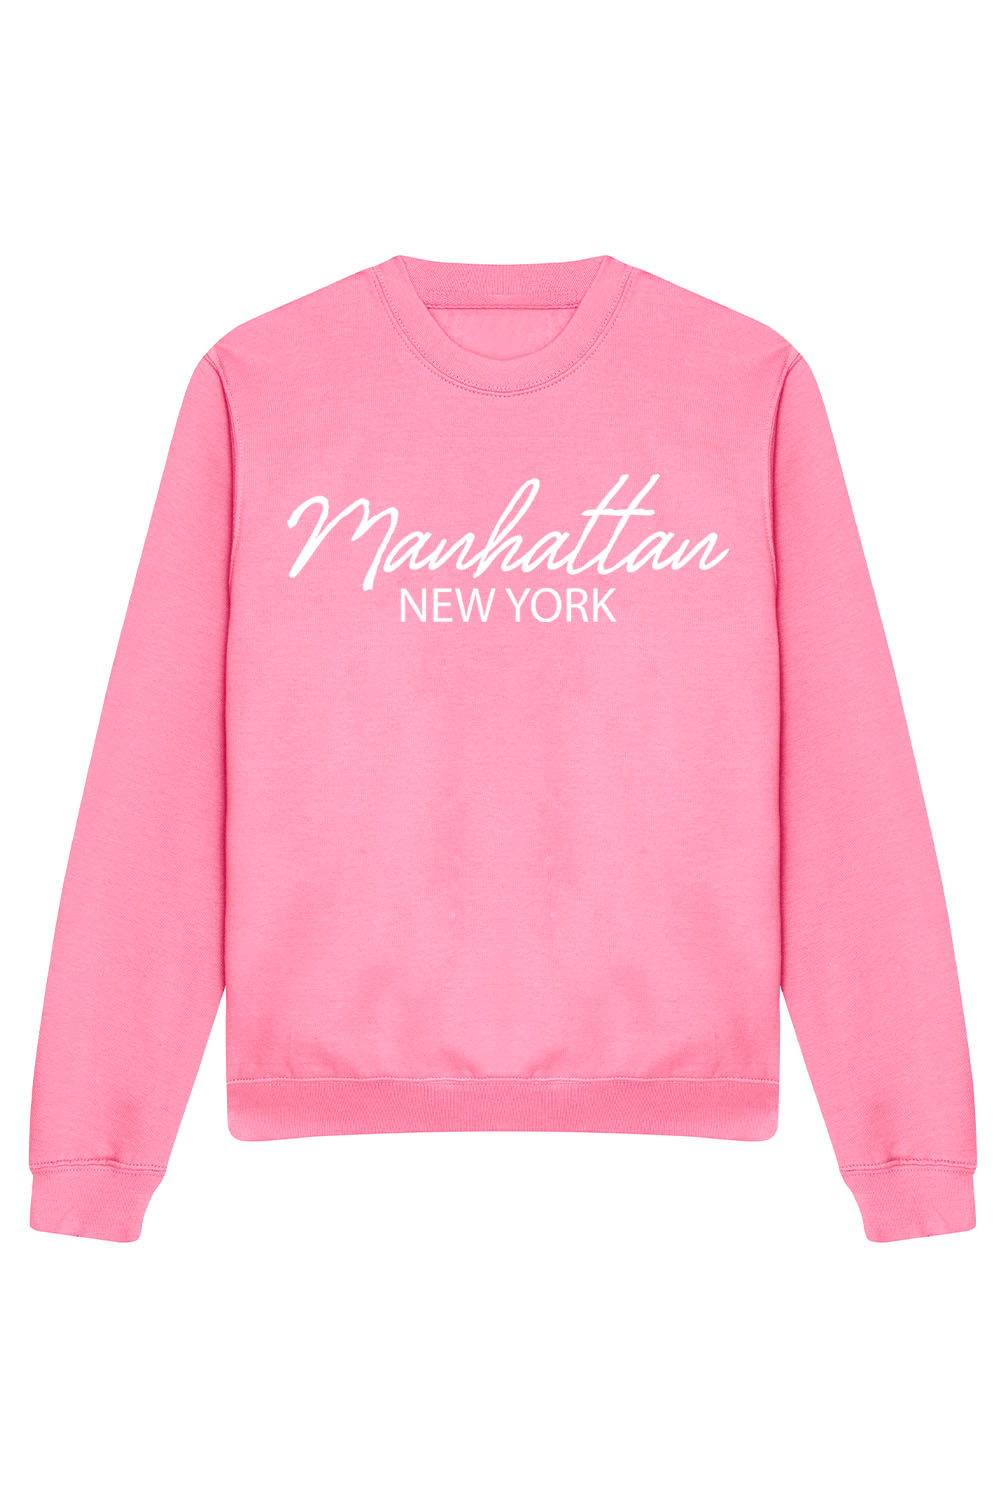 Manhattan Sweatshirt In Candy Floss Pink(CUSTOM PACKS)